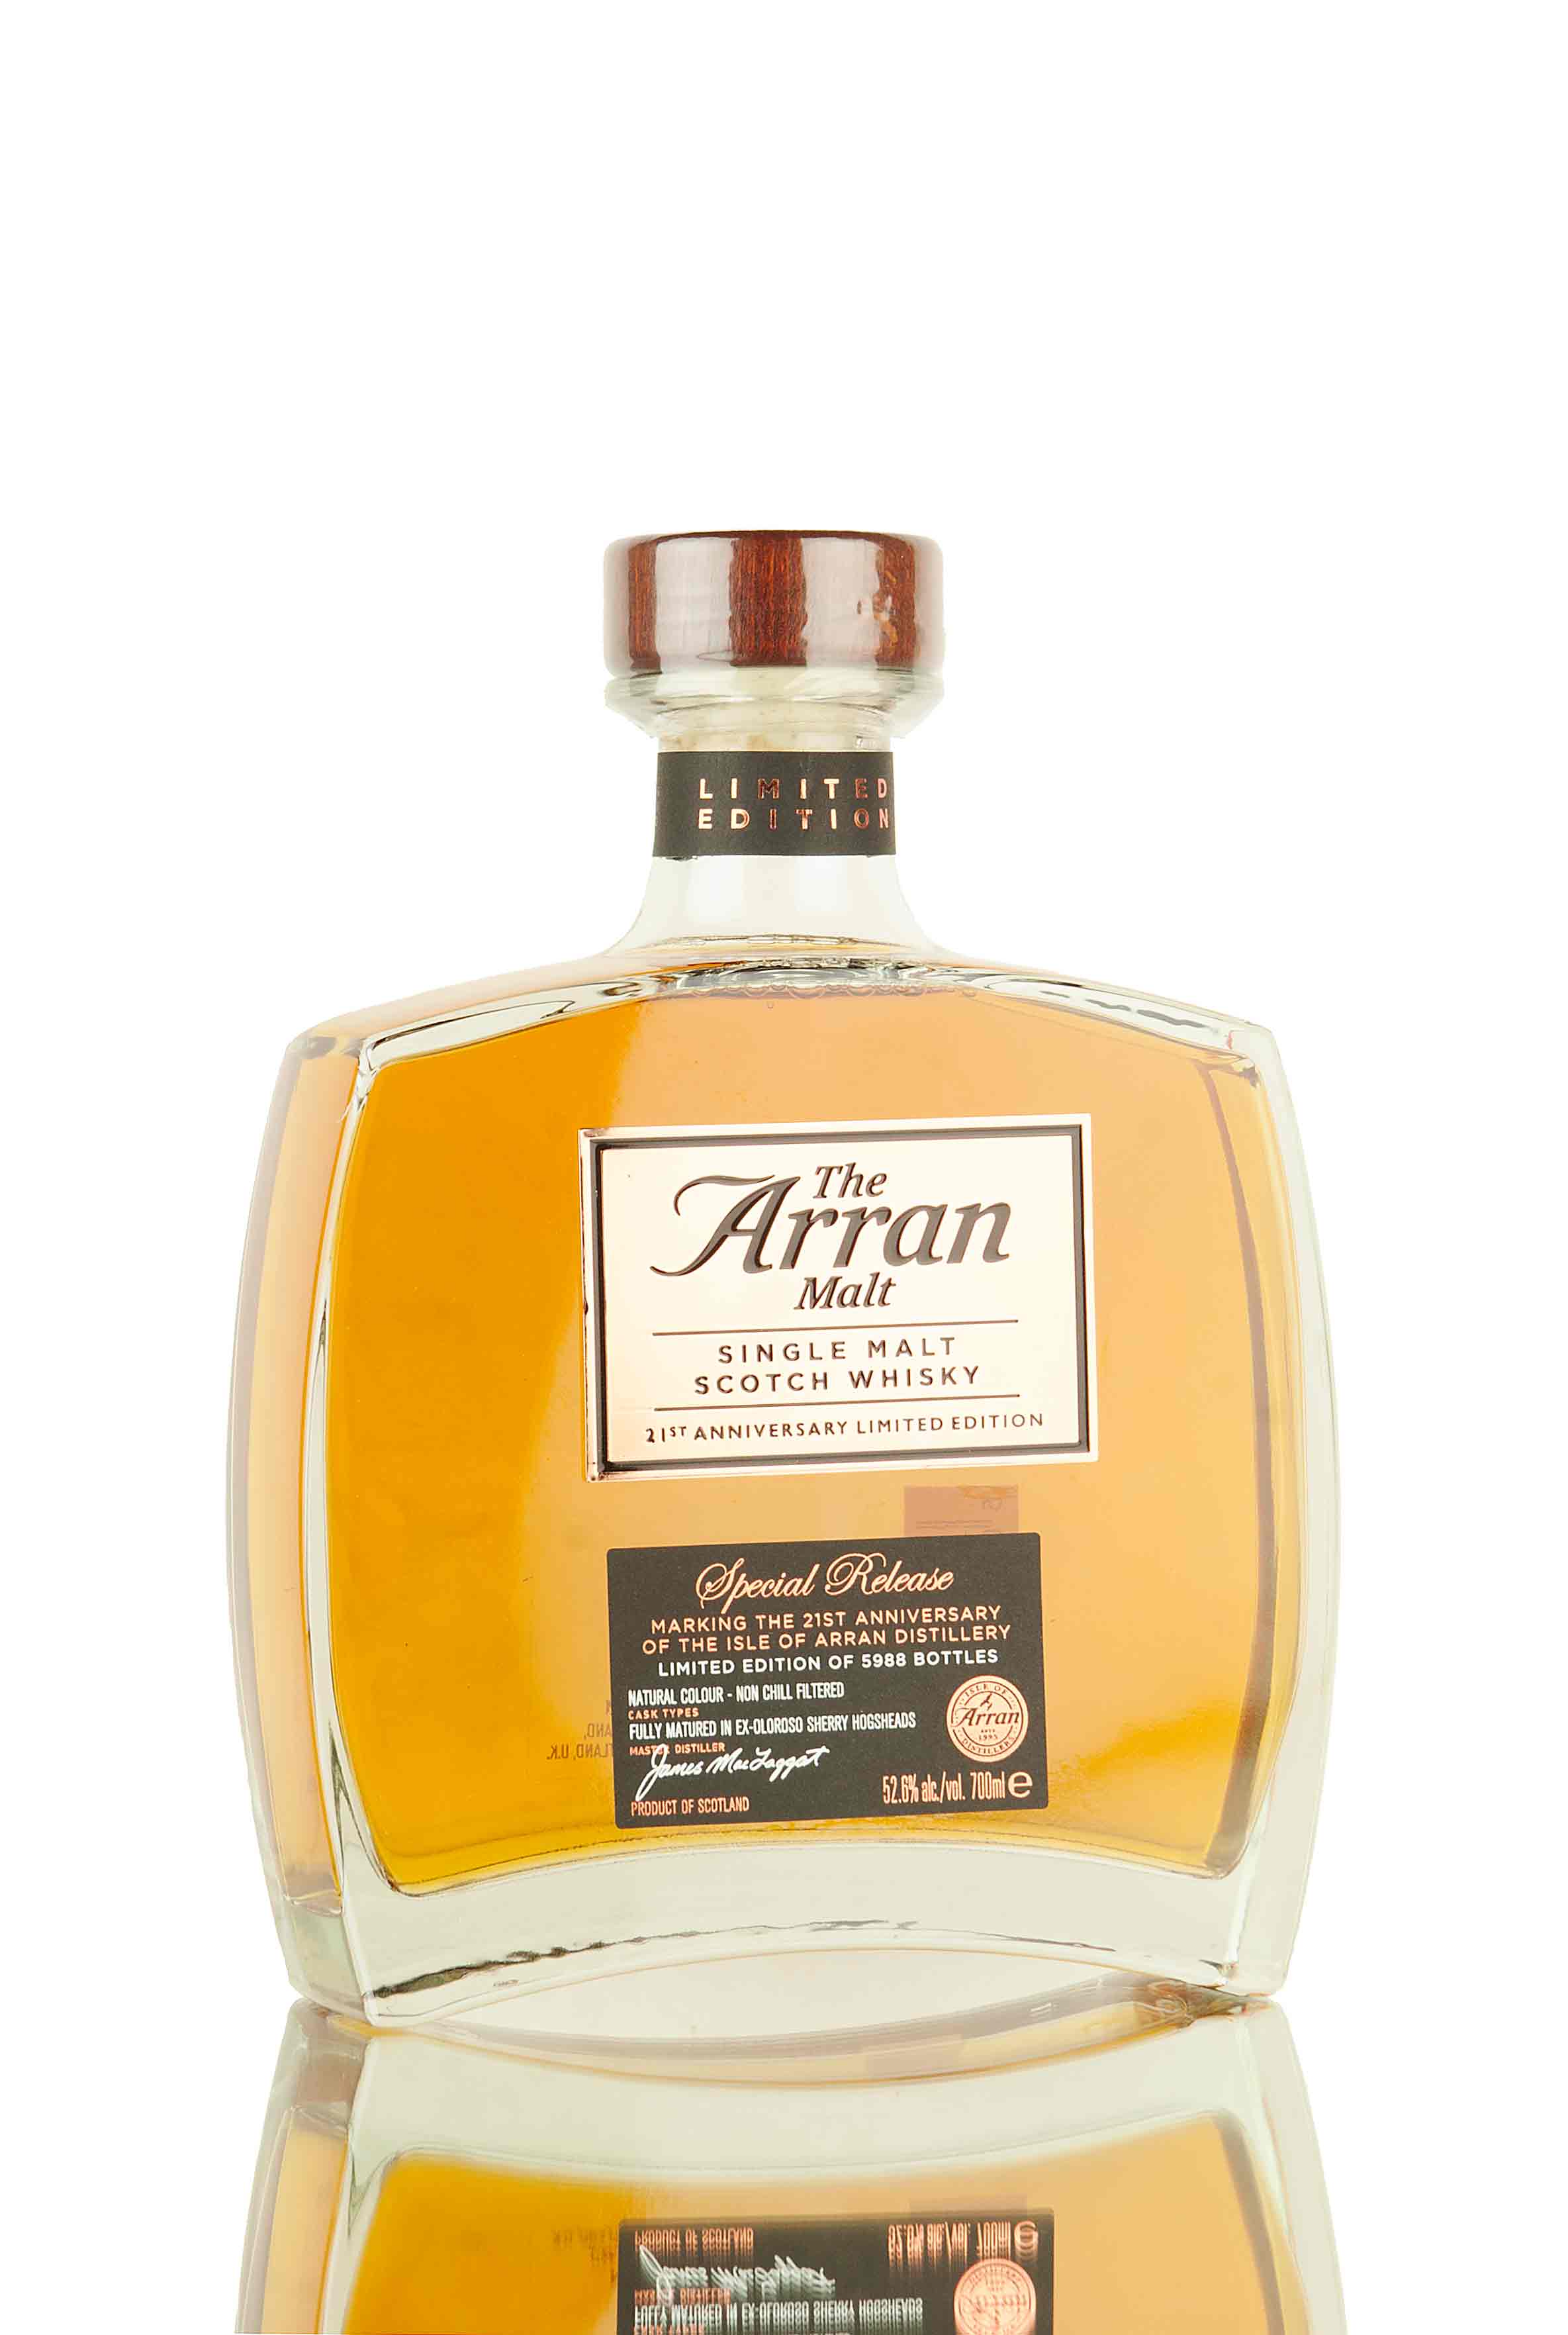 Arran 21st Anniversary Limited Edition